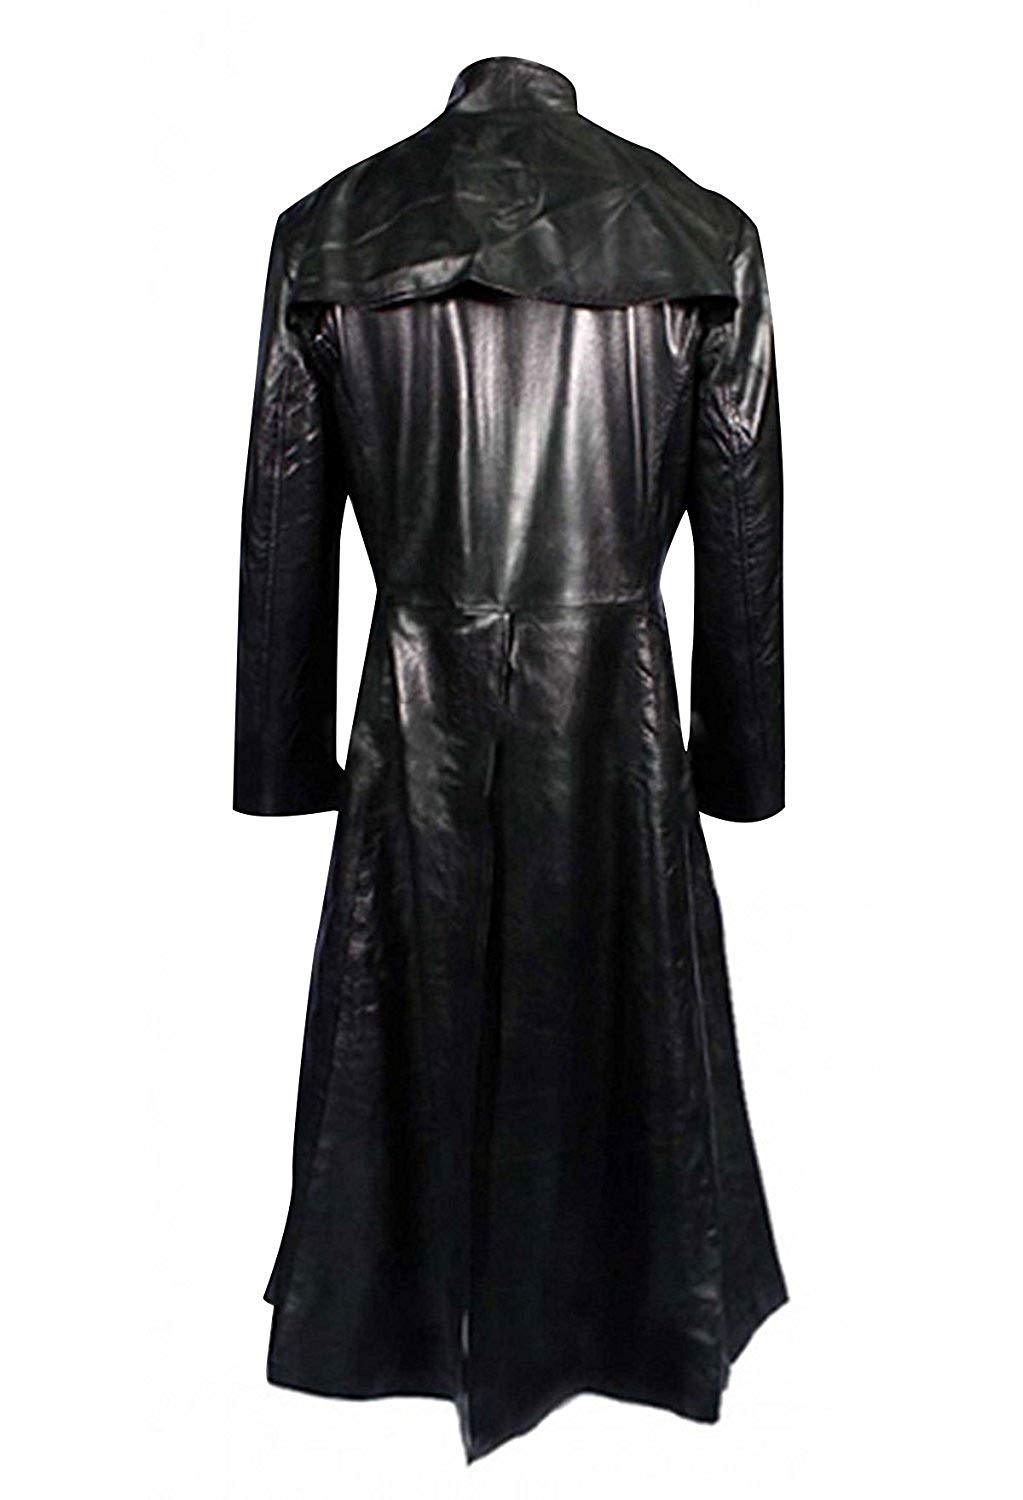 Matrix Neo Keanu Reeves Black Gothic Trench Coat Full Length Long ...